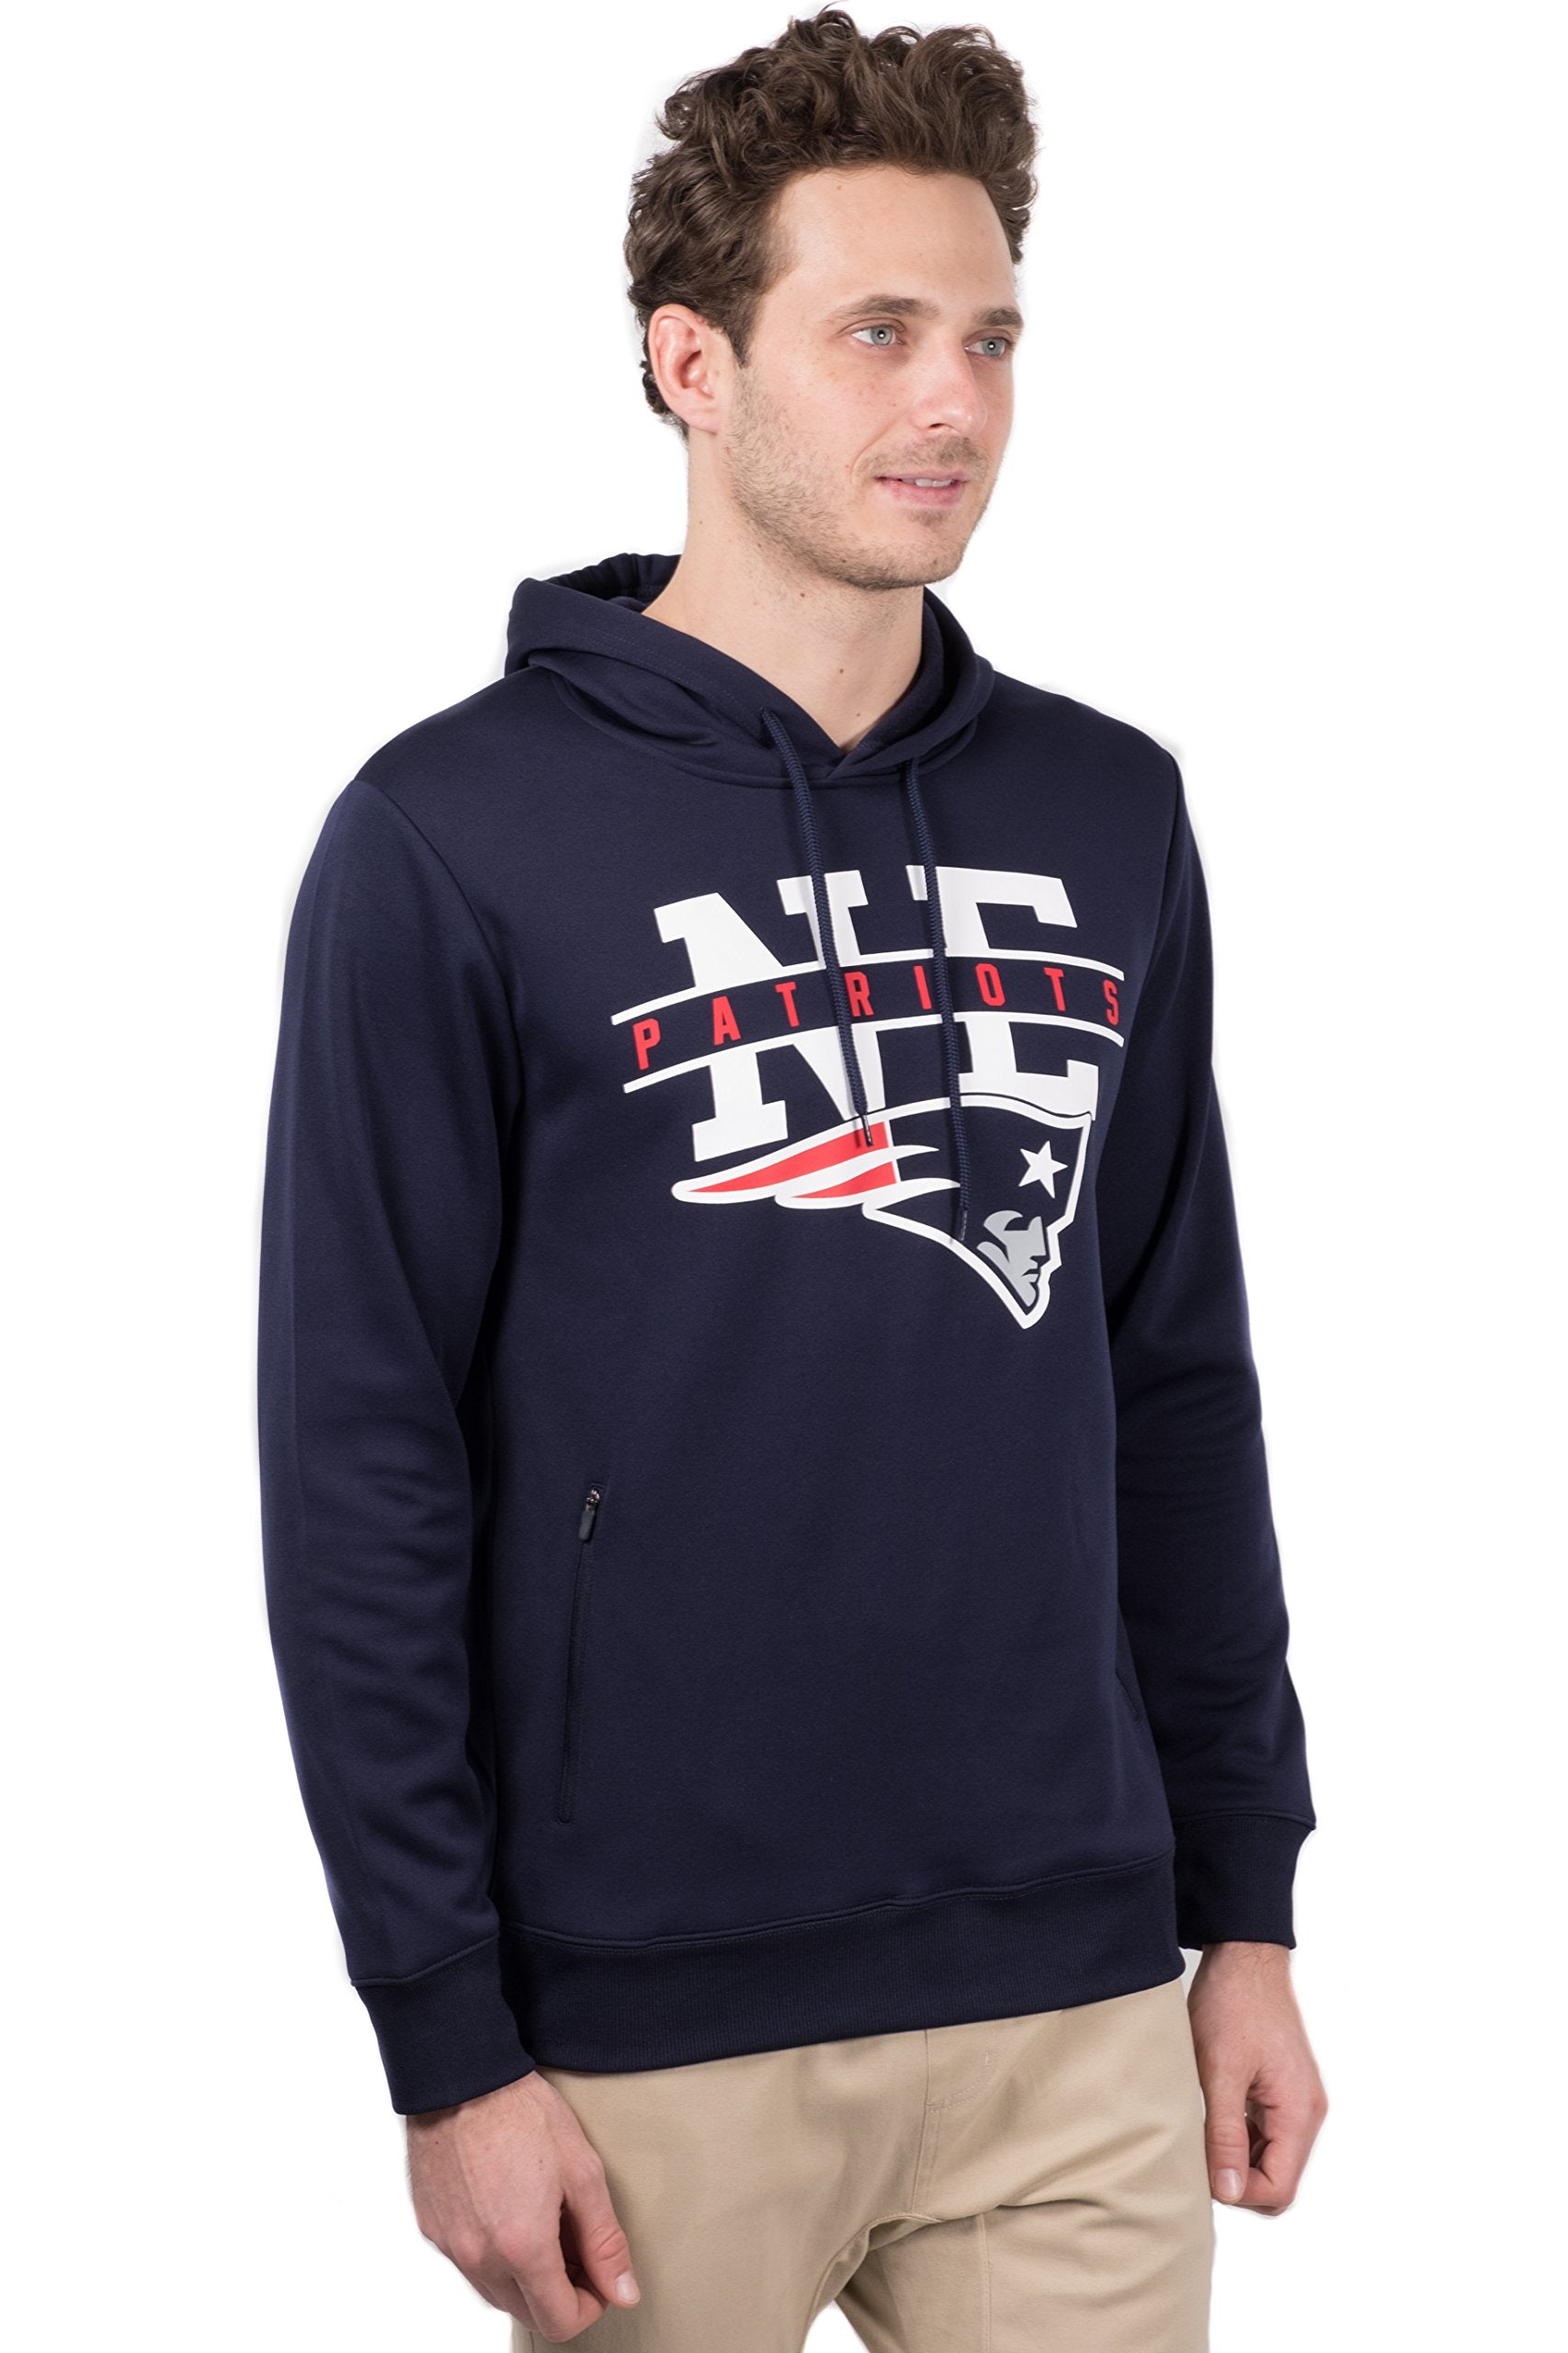 Ultra Game NFL New England Patriots Mens Soft Fleece Hoodie Pullover Sweatshirt With Zipper Pockets|New England Patriots - UltraGameShop